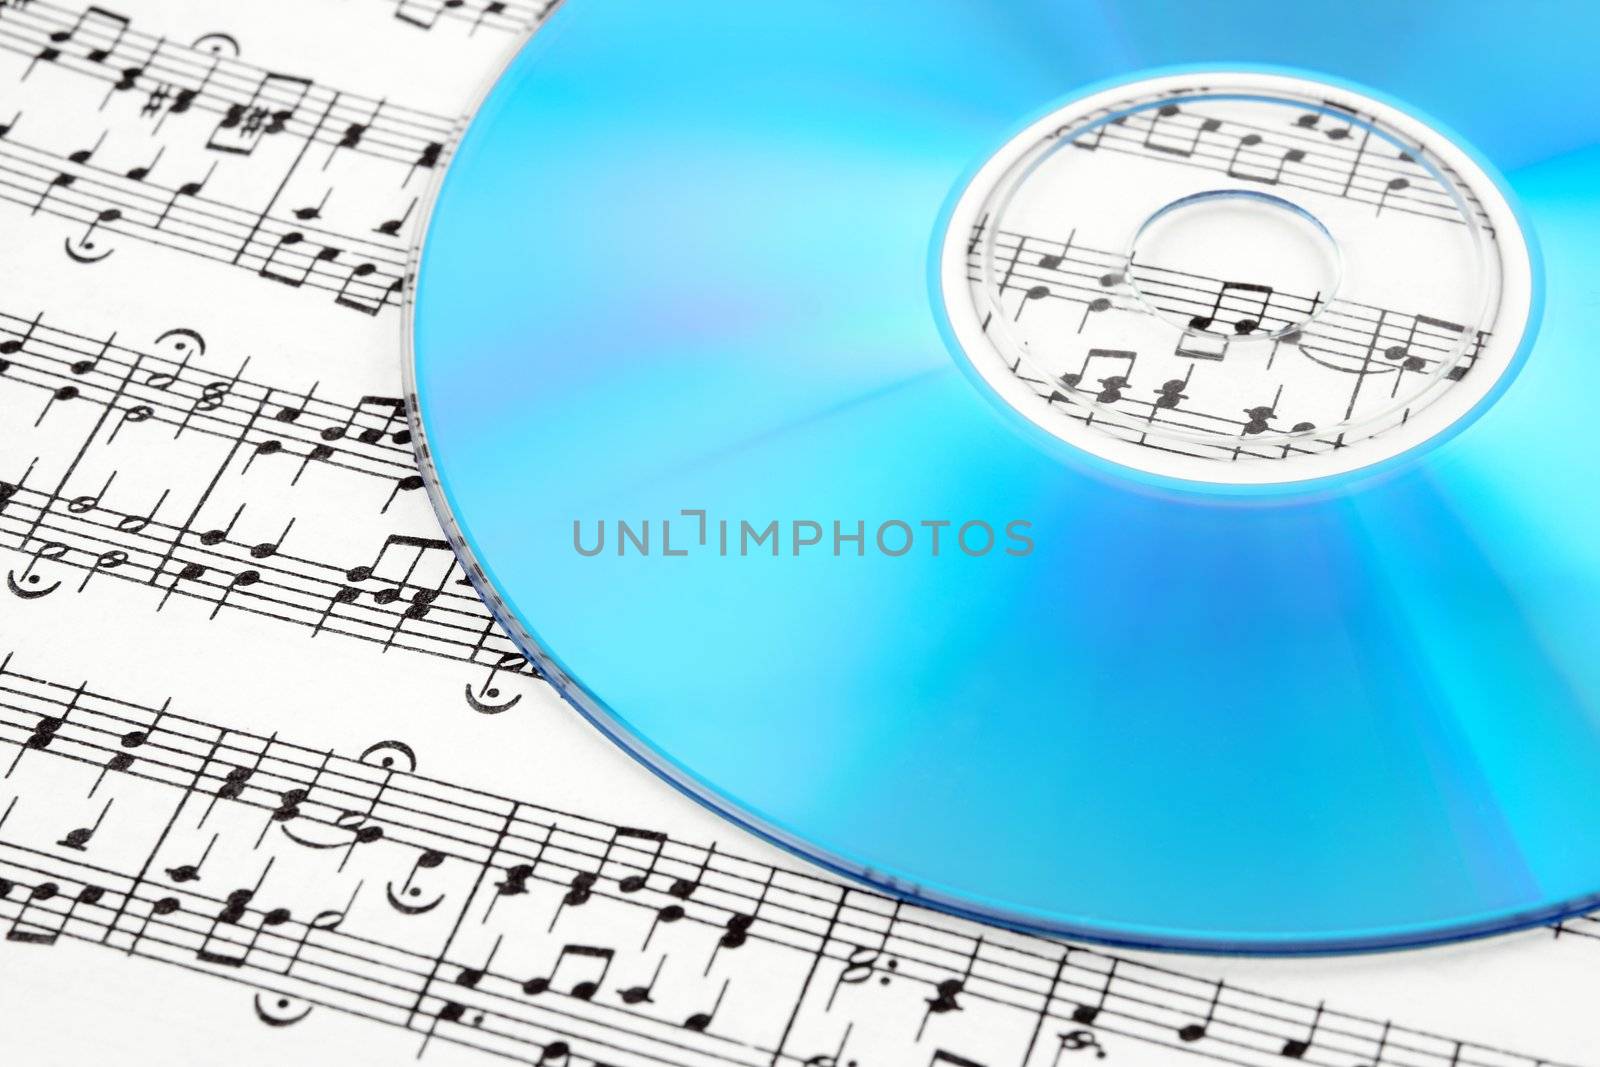 Blue CD or DVD on sheet music. Digital music concept.